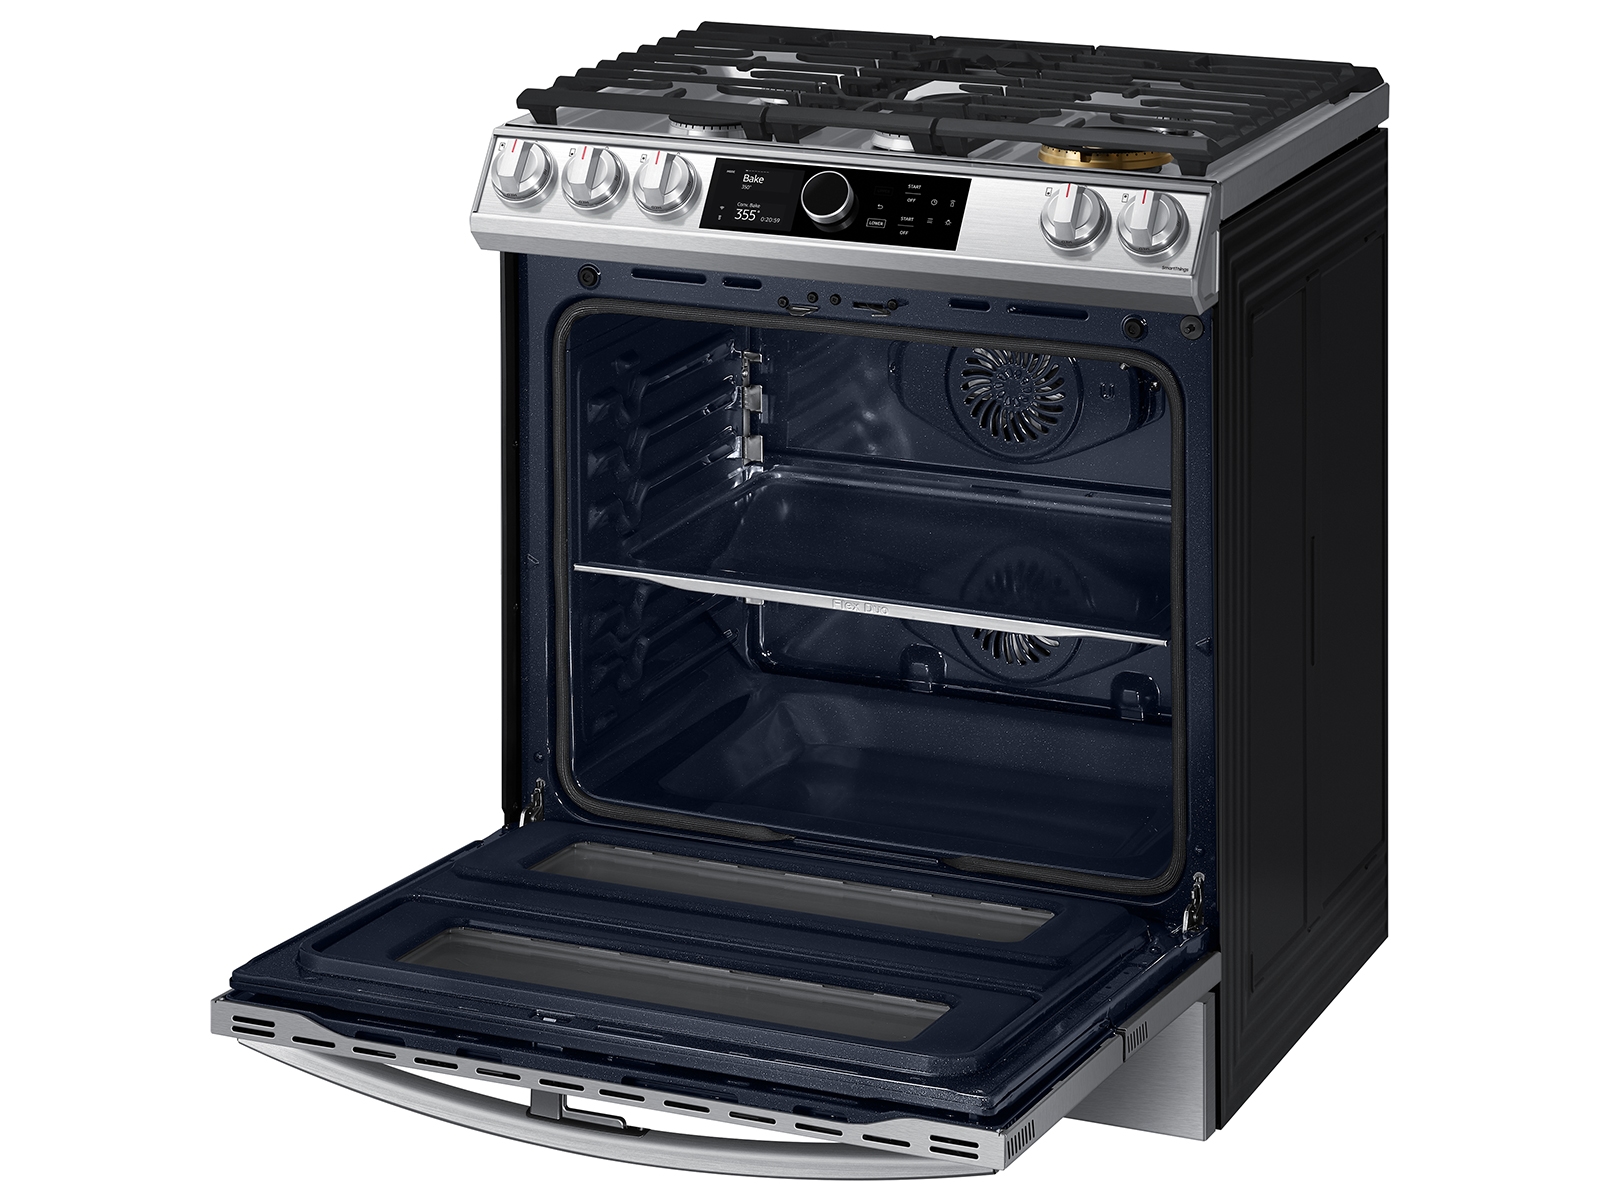 Instore bakery ovens: smaller, easier to operate